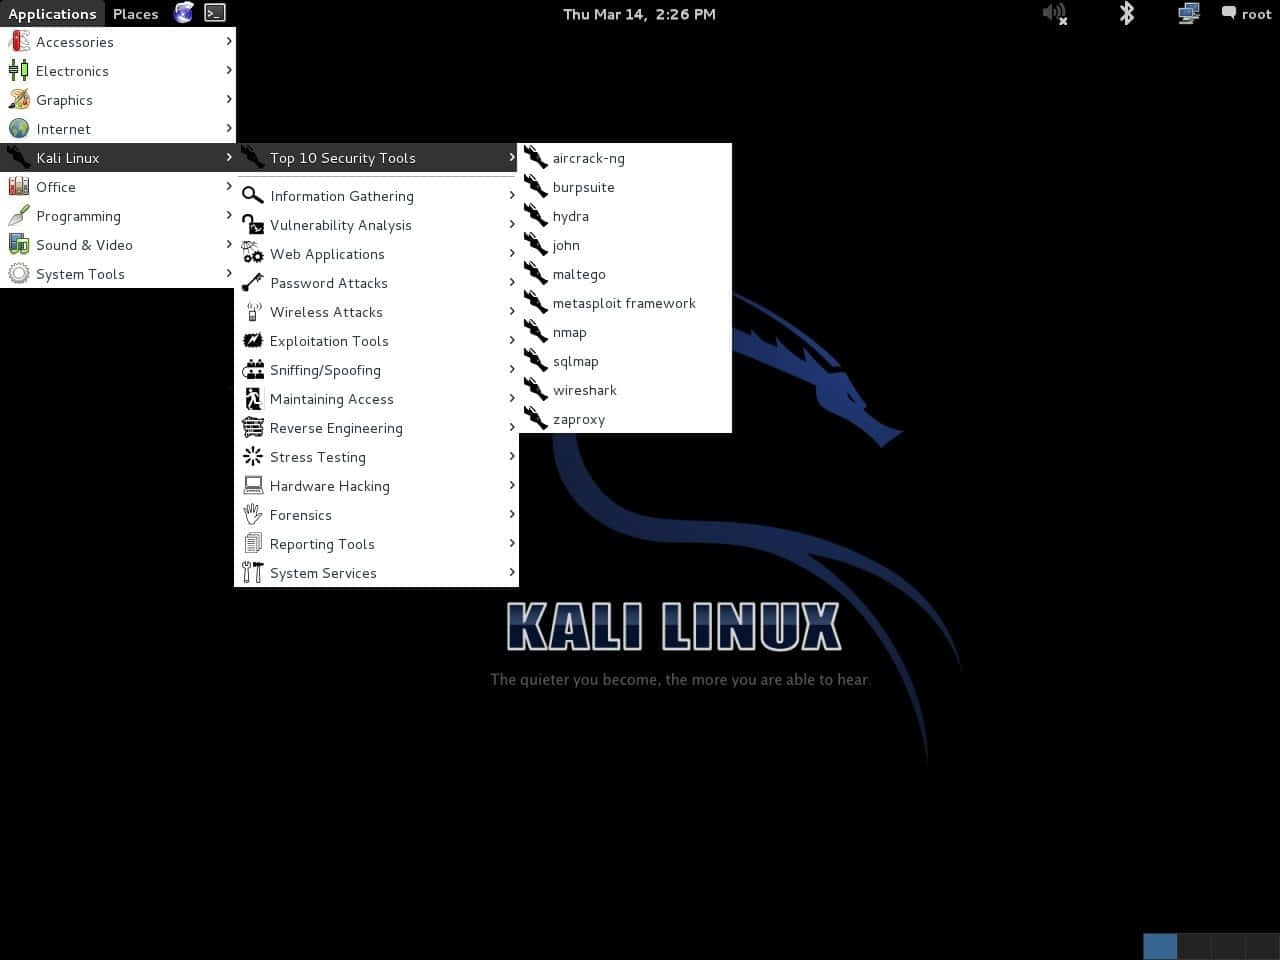 Bildervon Kali Linux